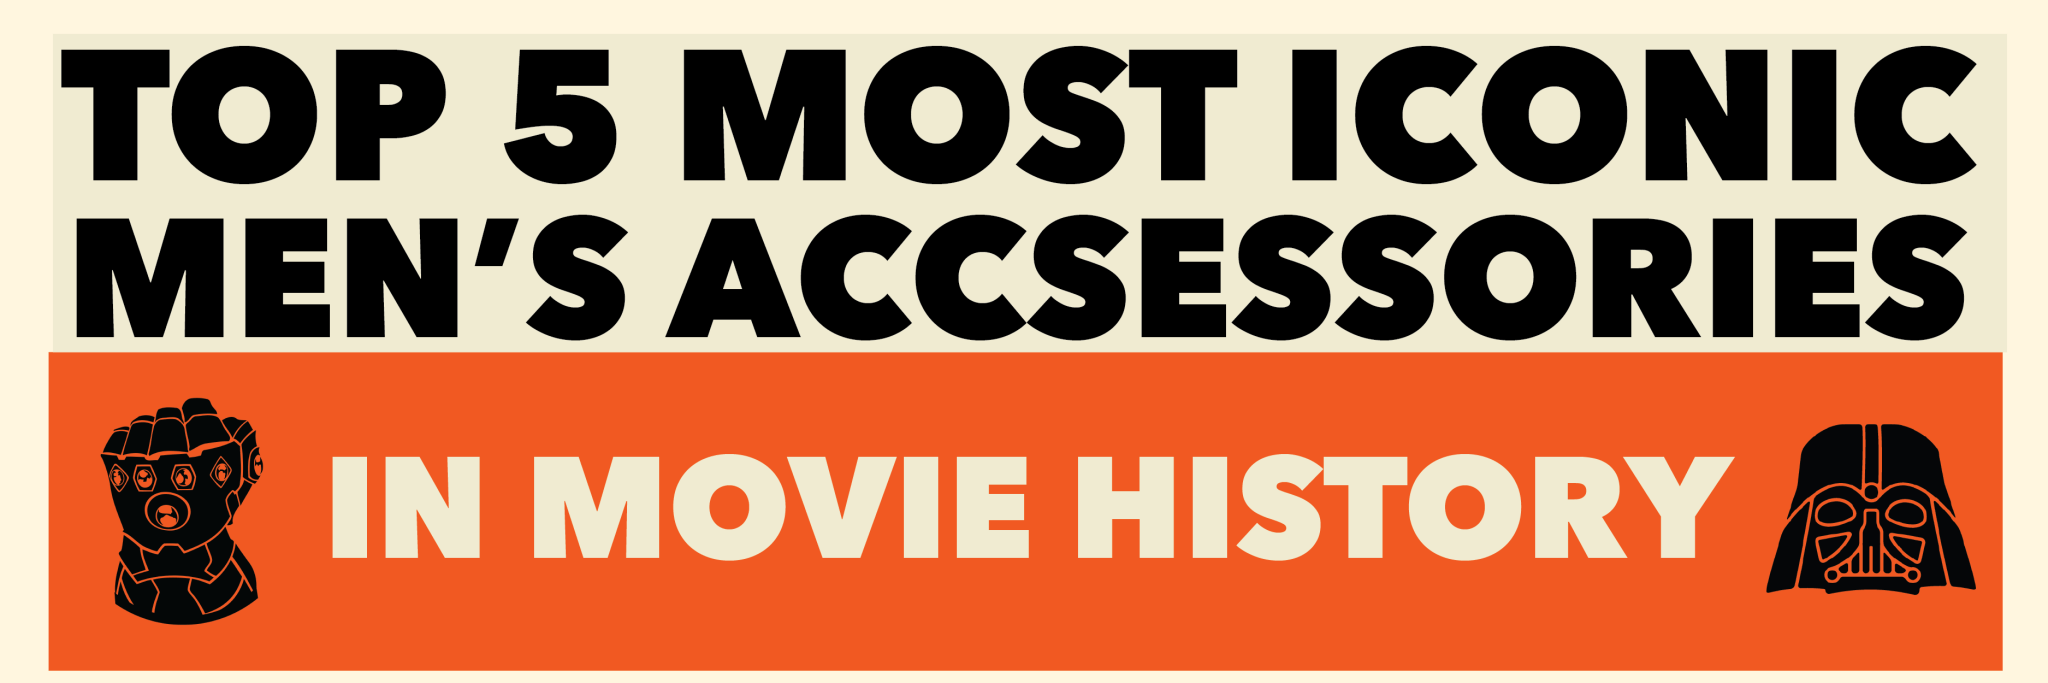 Top 5 Most Iconic Men’s Accessories in Movies - Elegatto